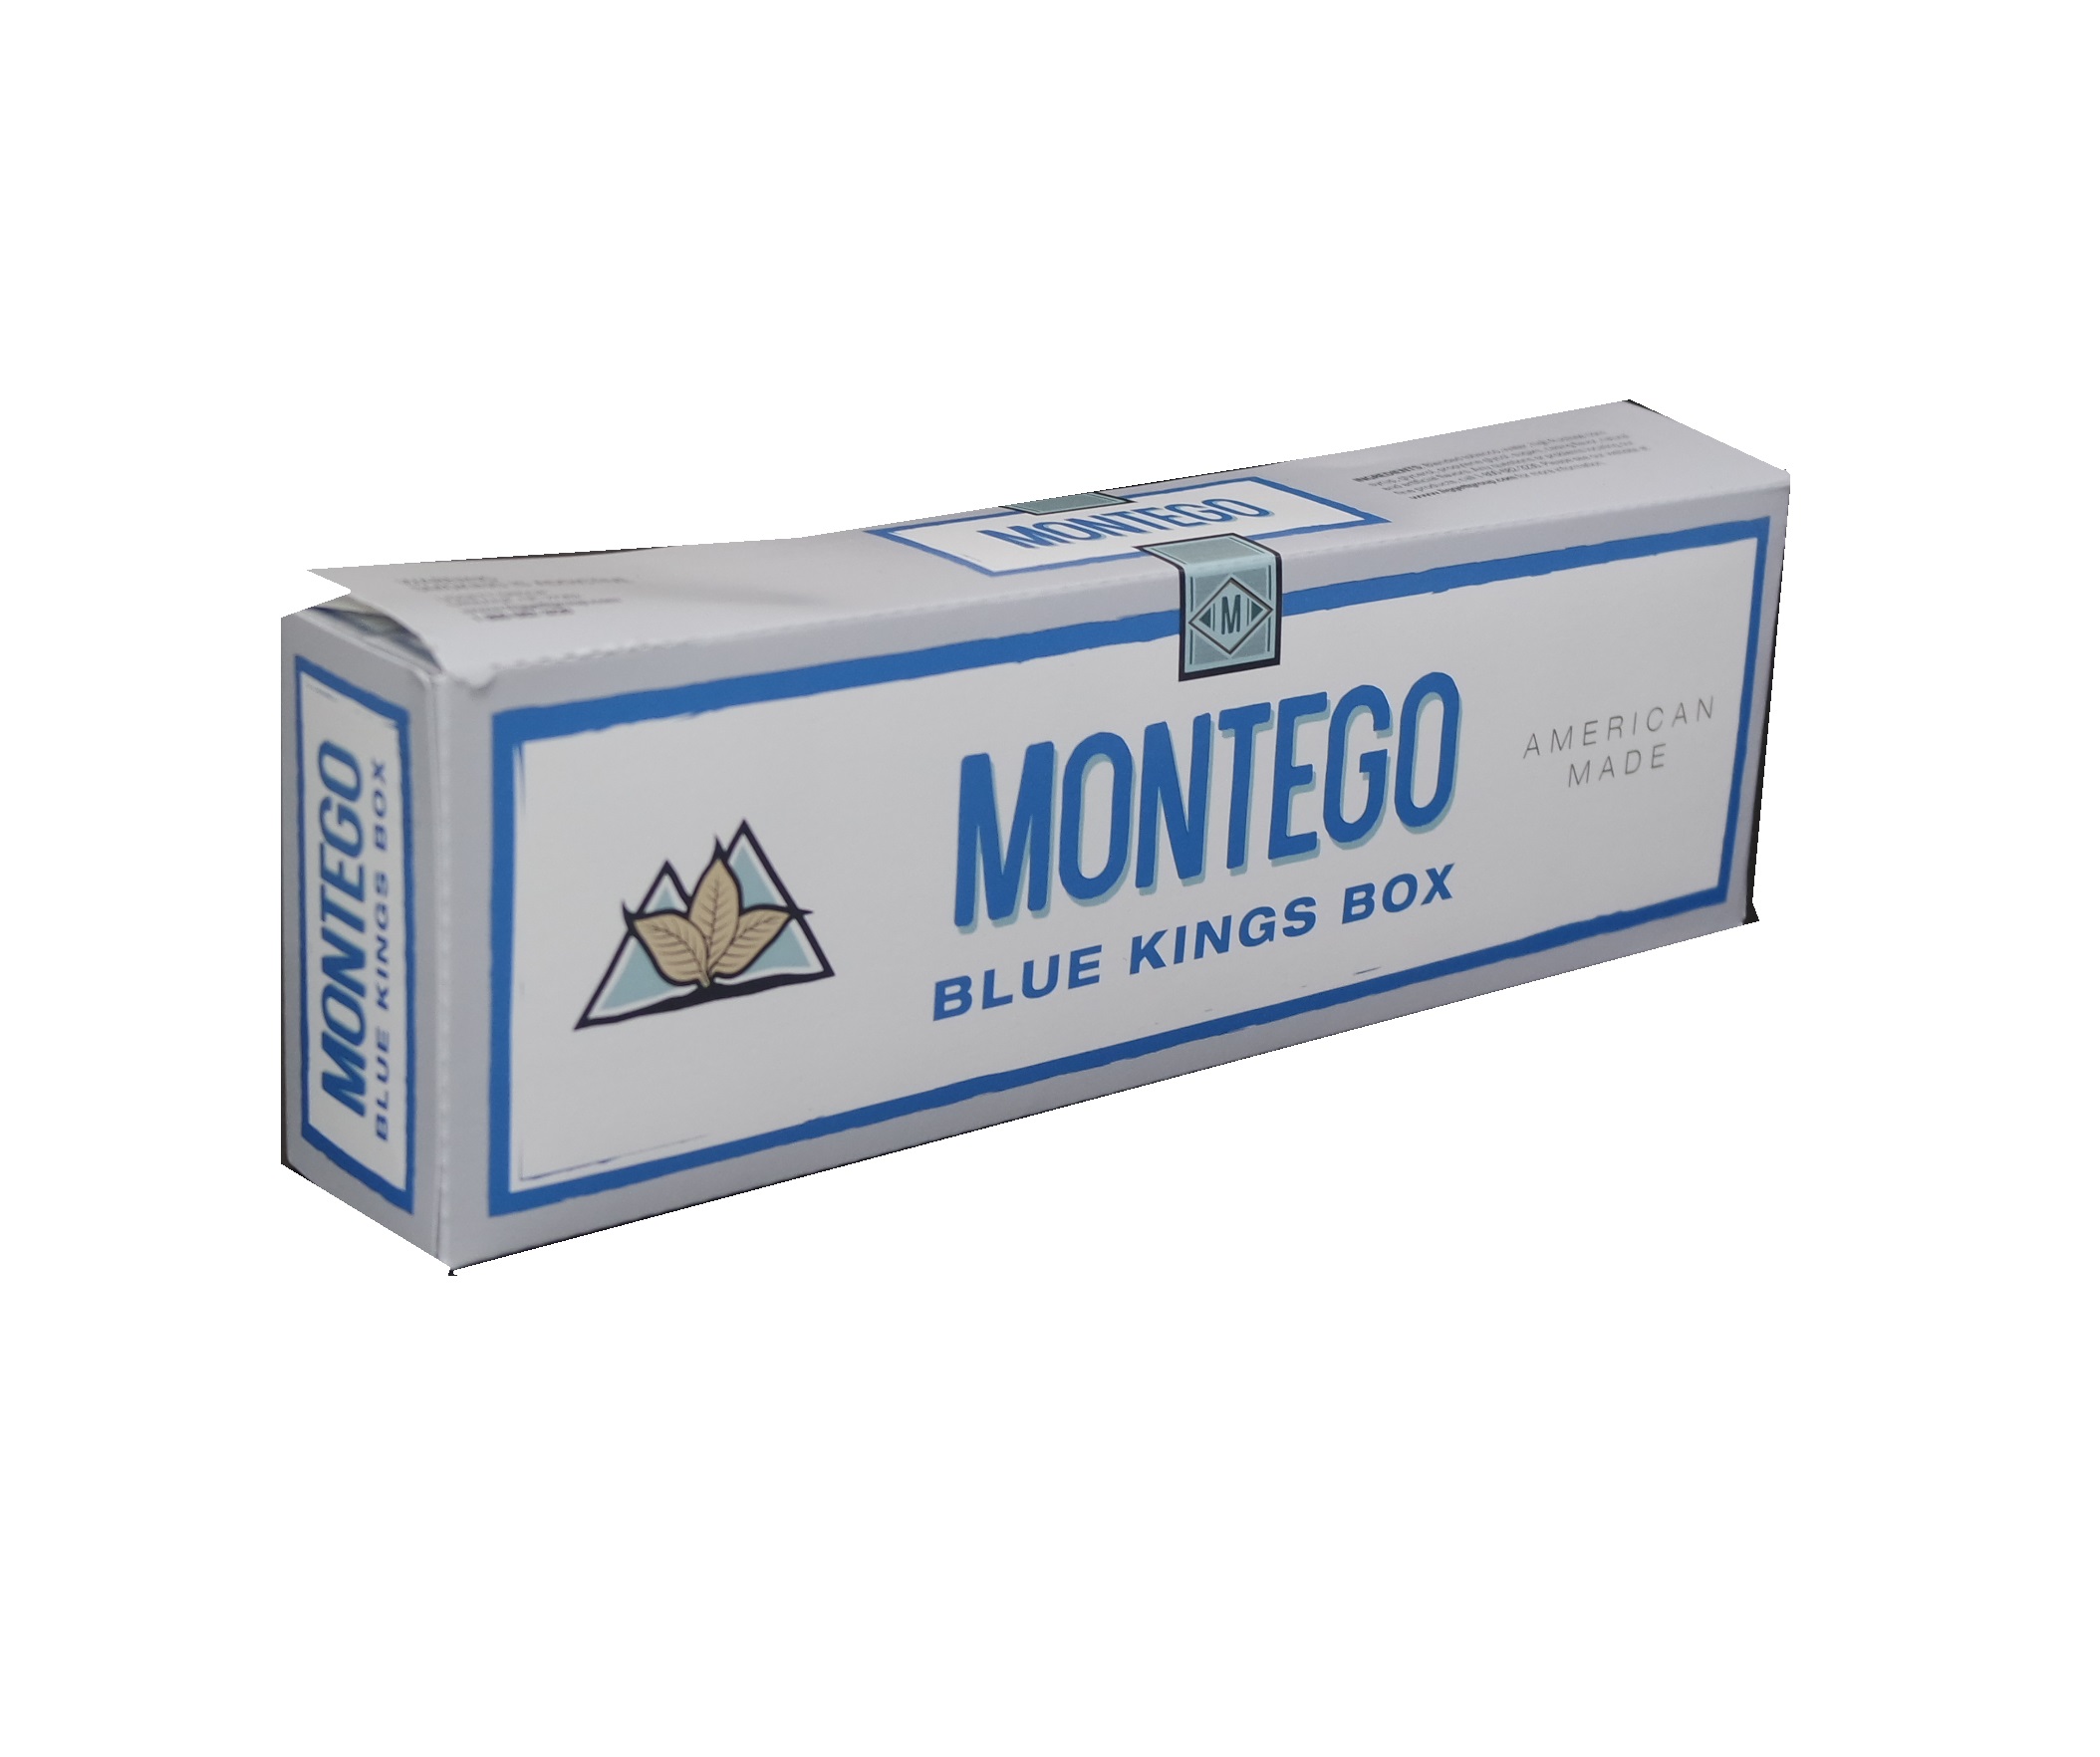 Montego blue king box